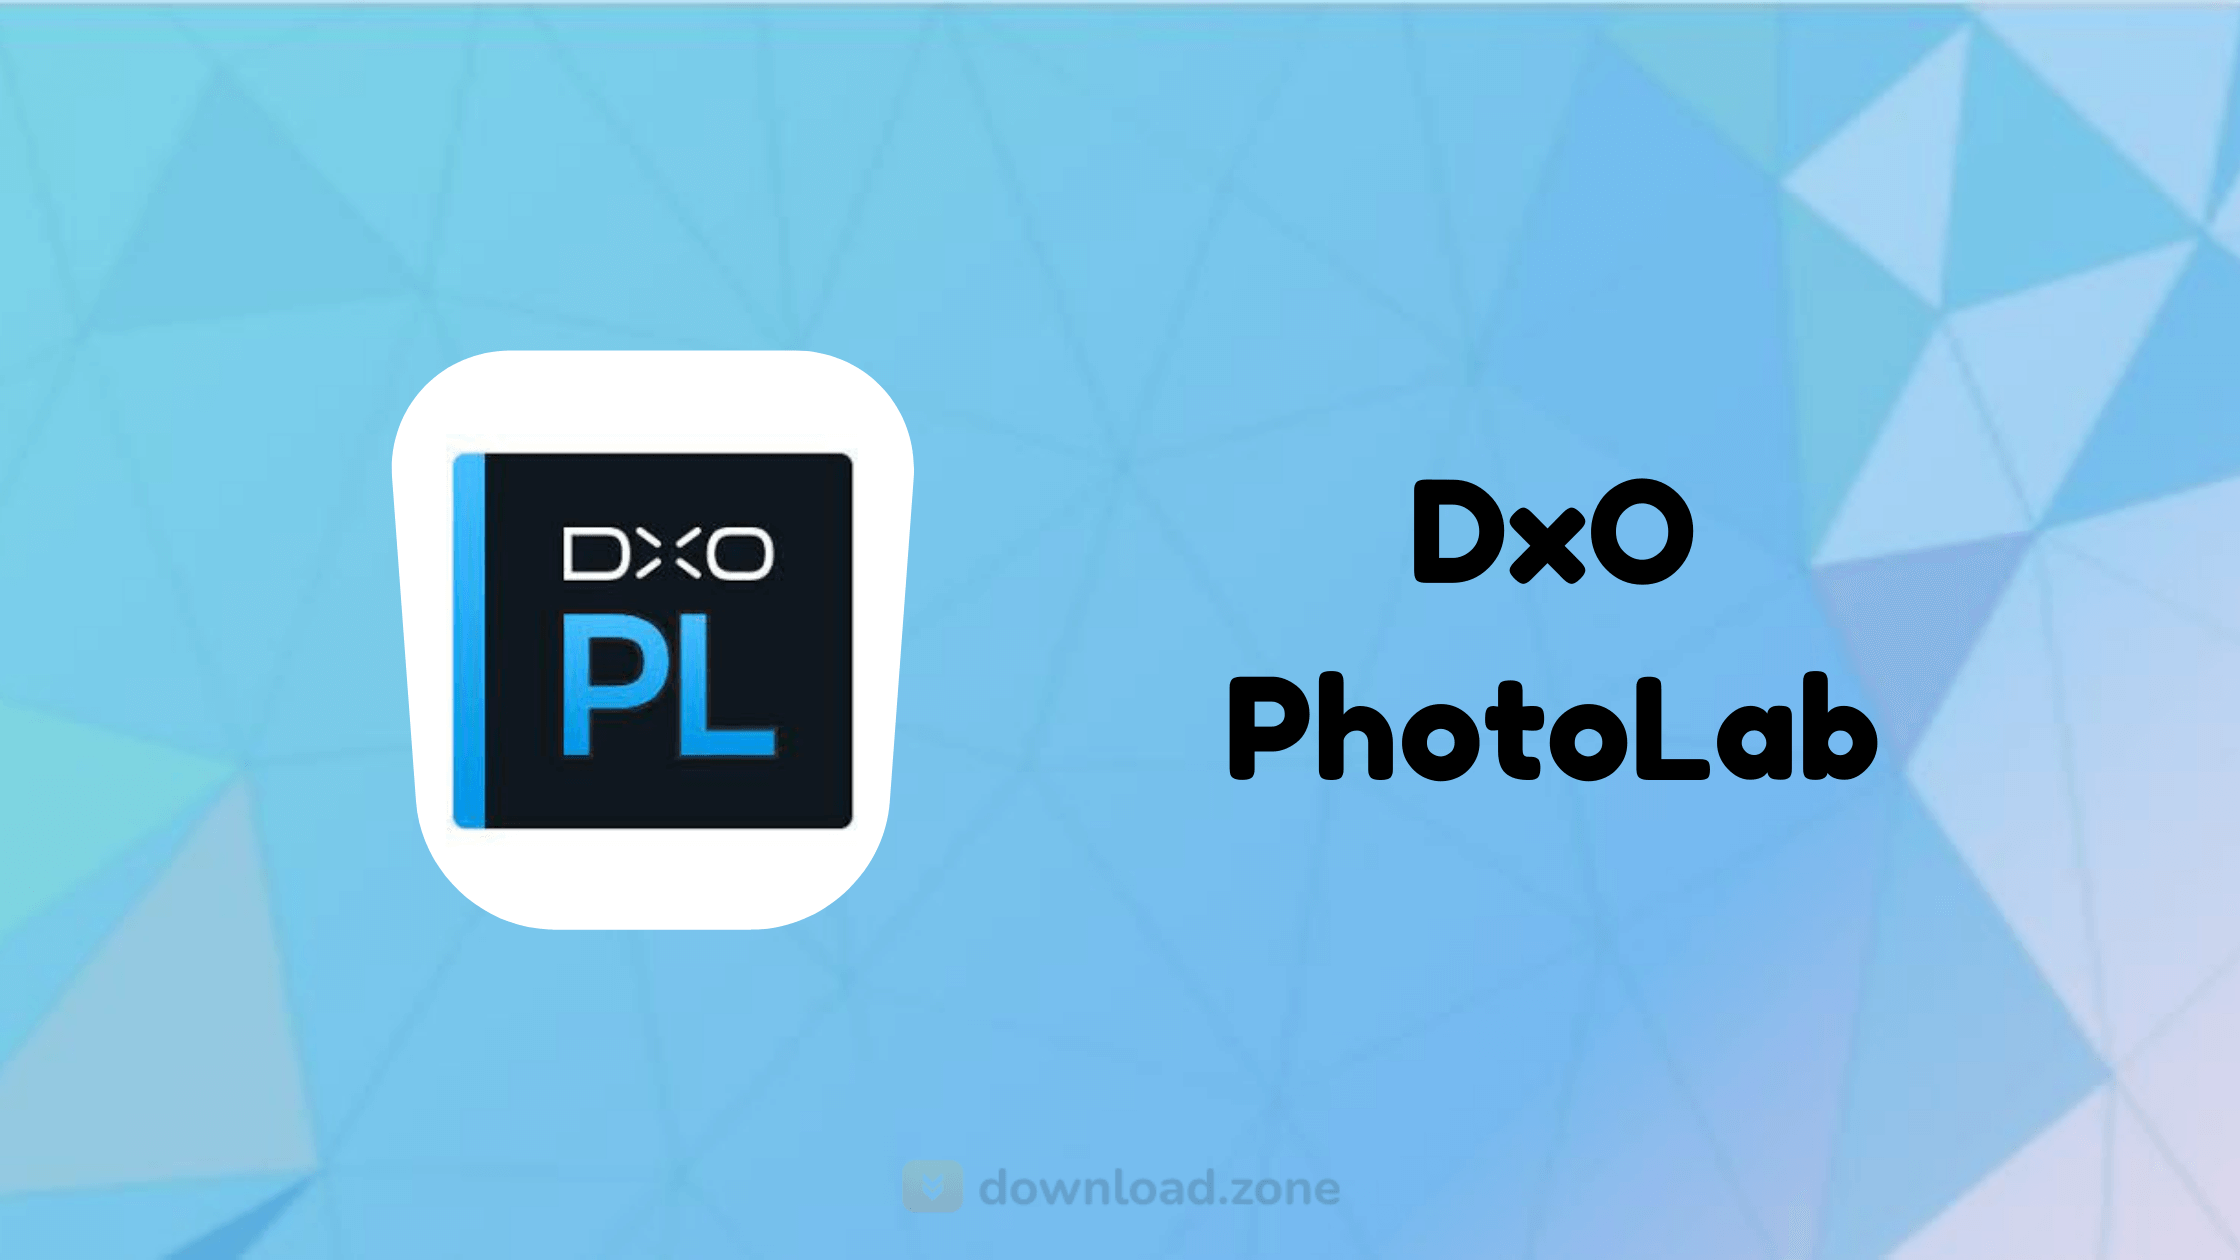 instal the new DxO PhotoLab 7.0.1.76